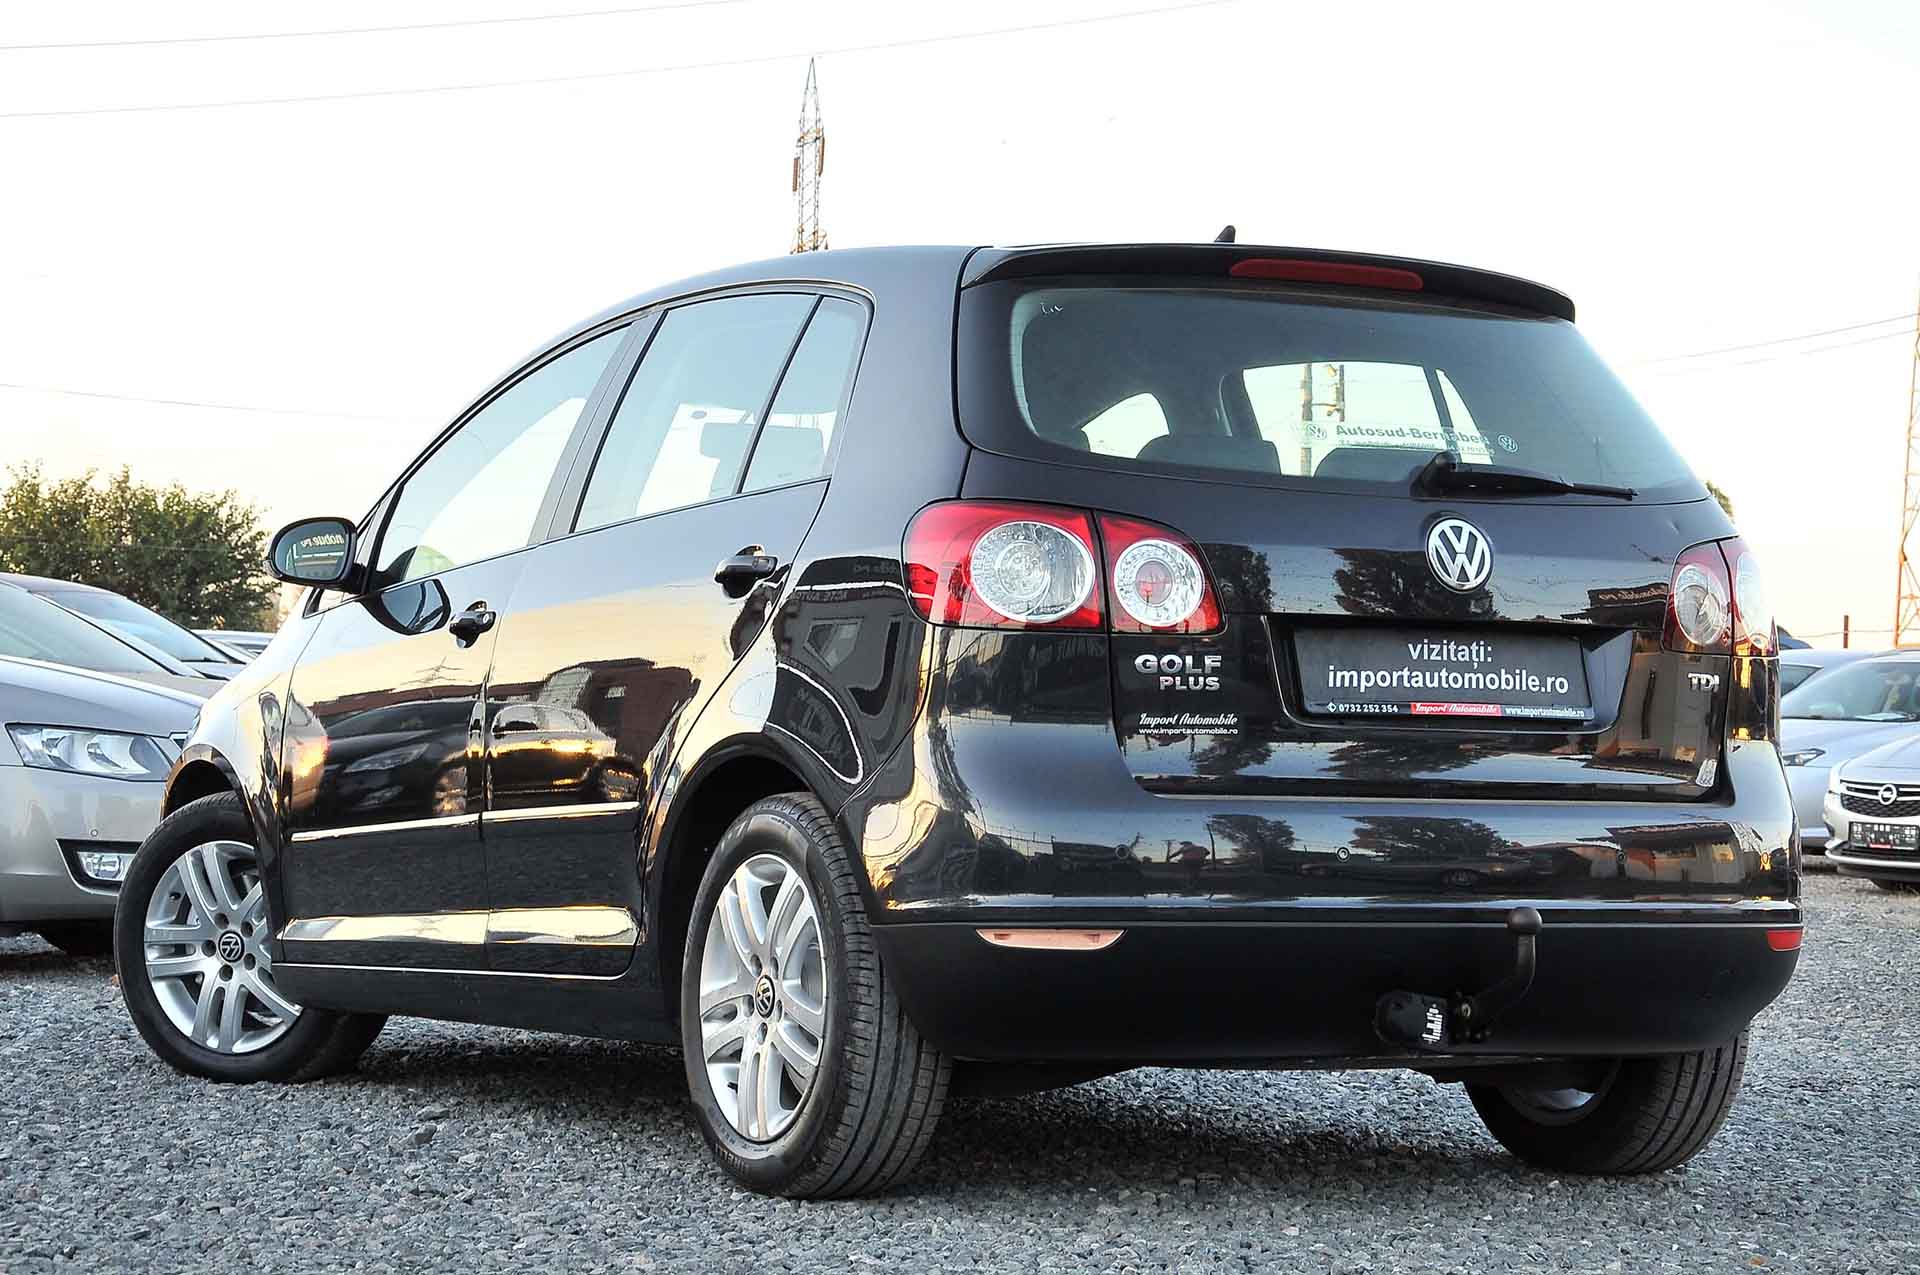 Volkswagen Golf Plus Import Automobile